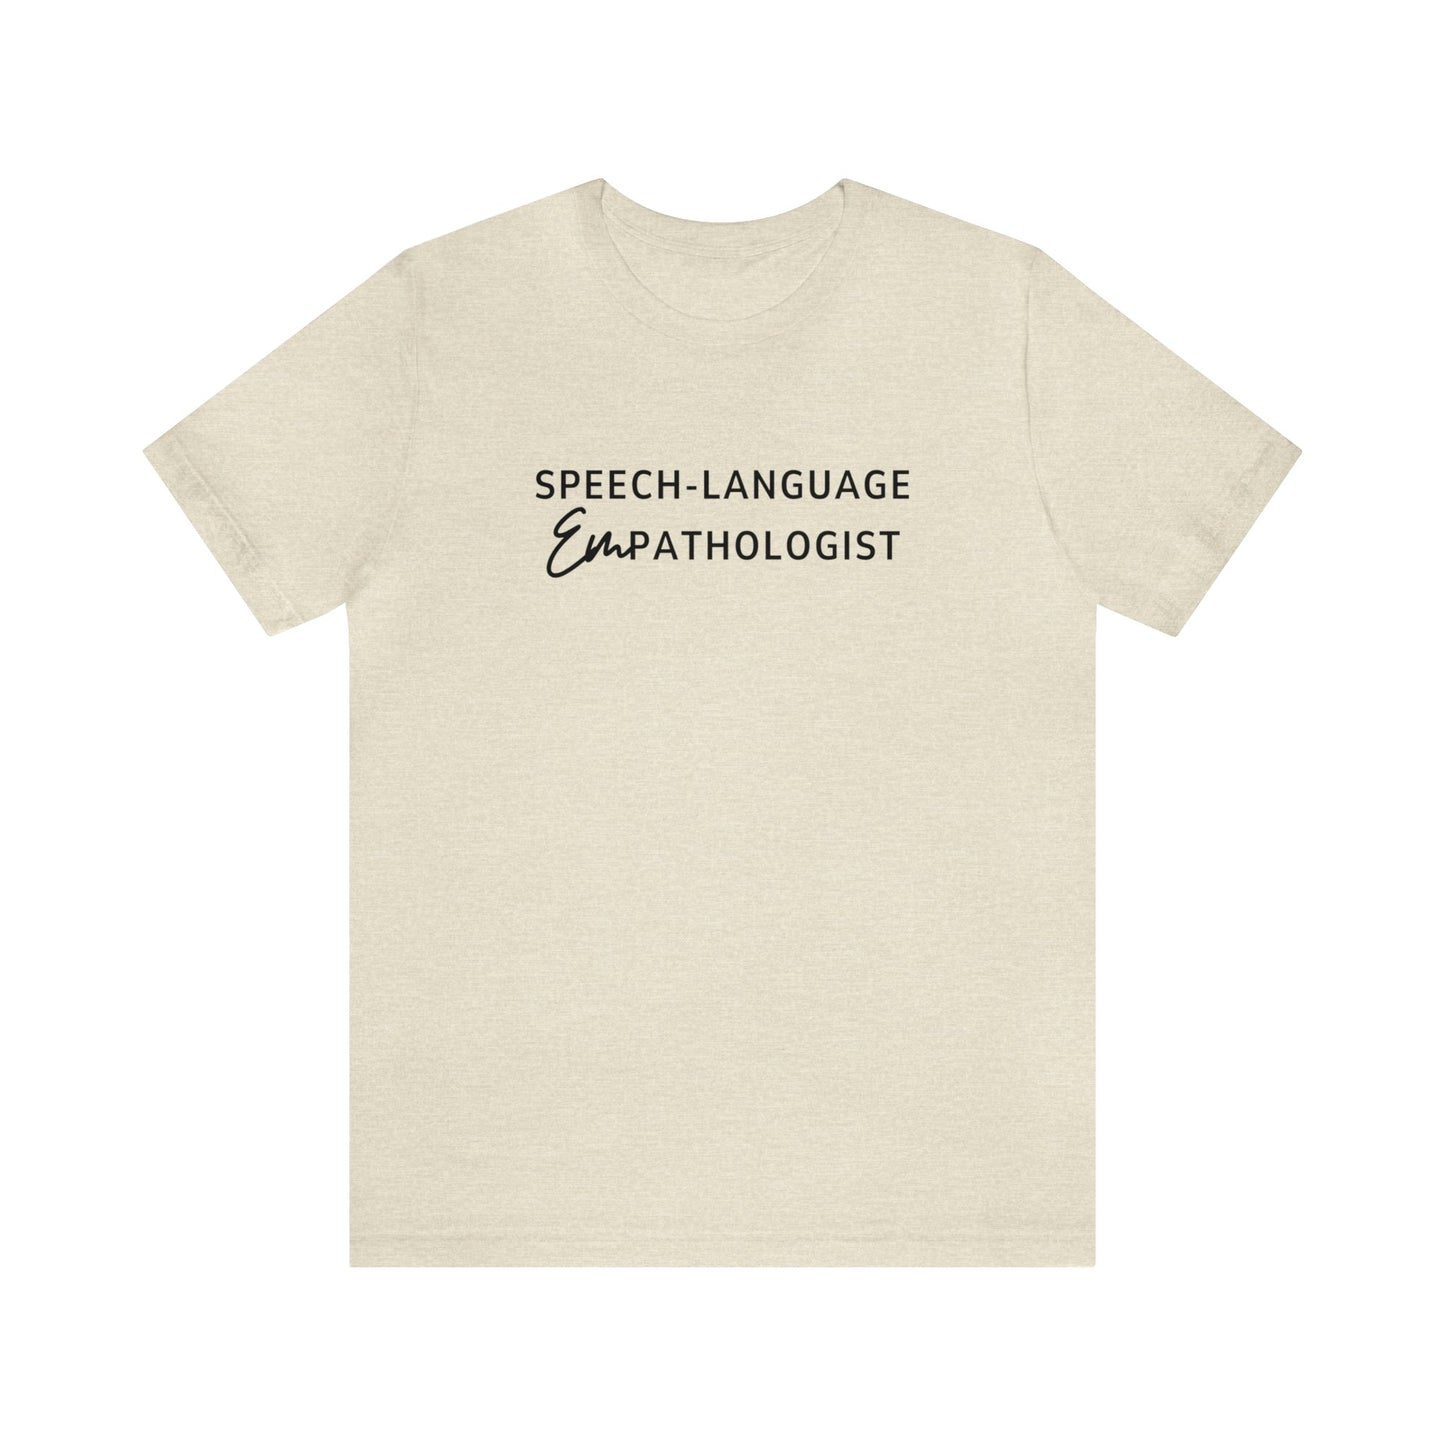 Speech-Language Empathologist Jersey T-Shirt